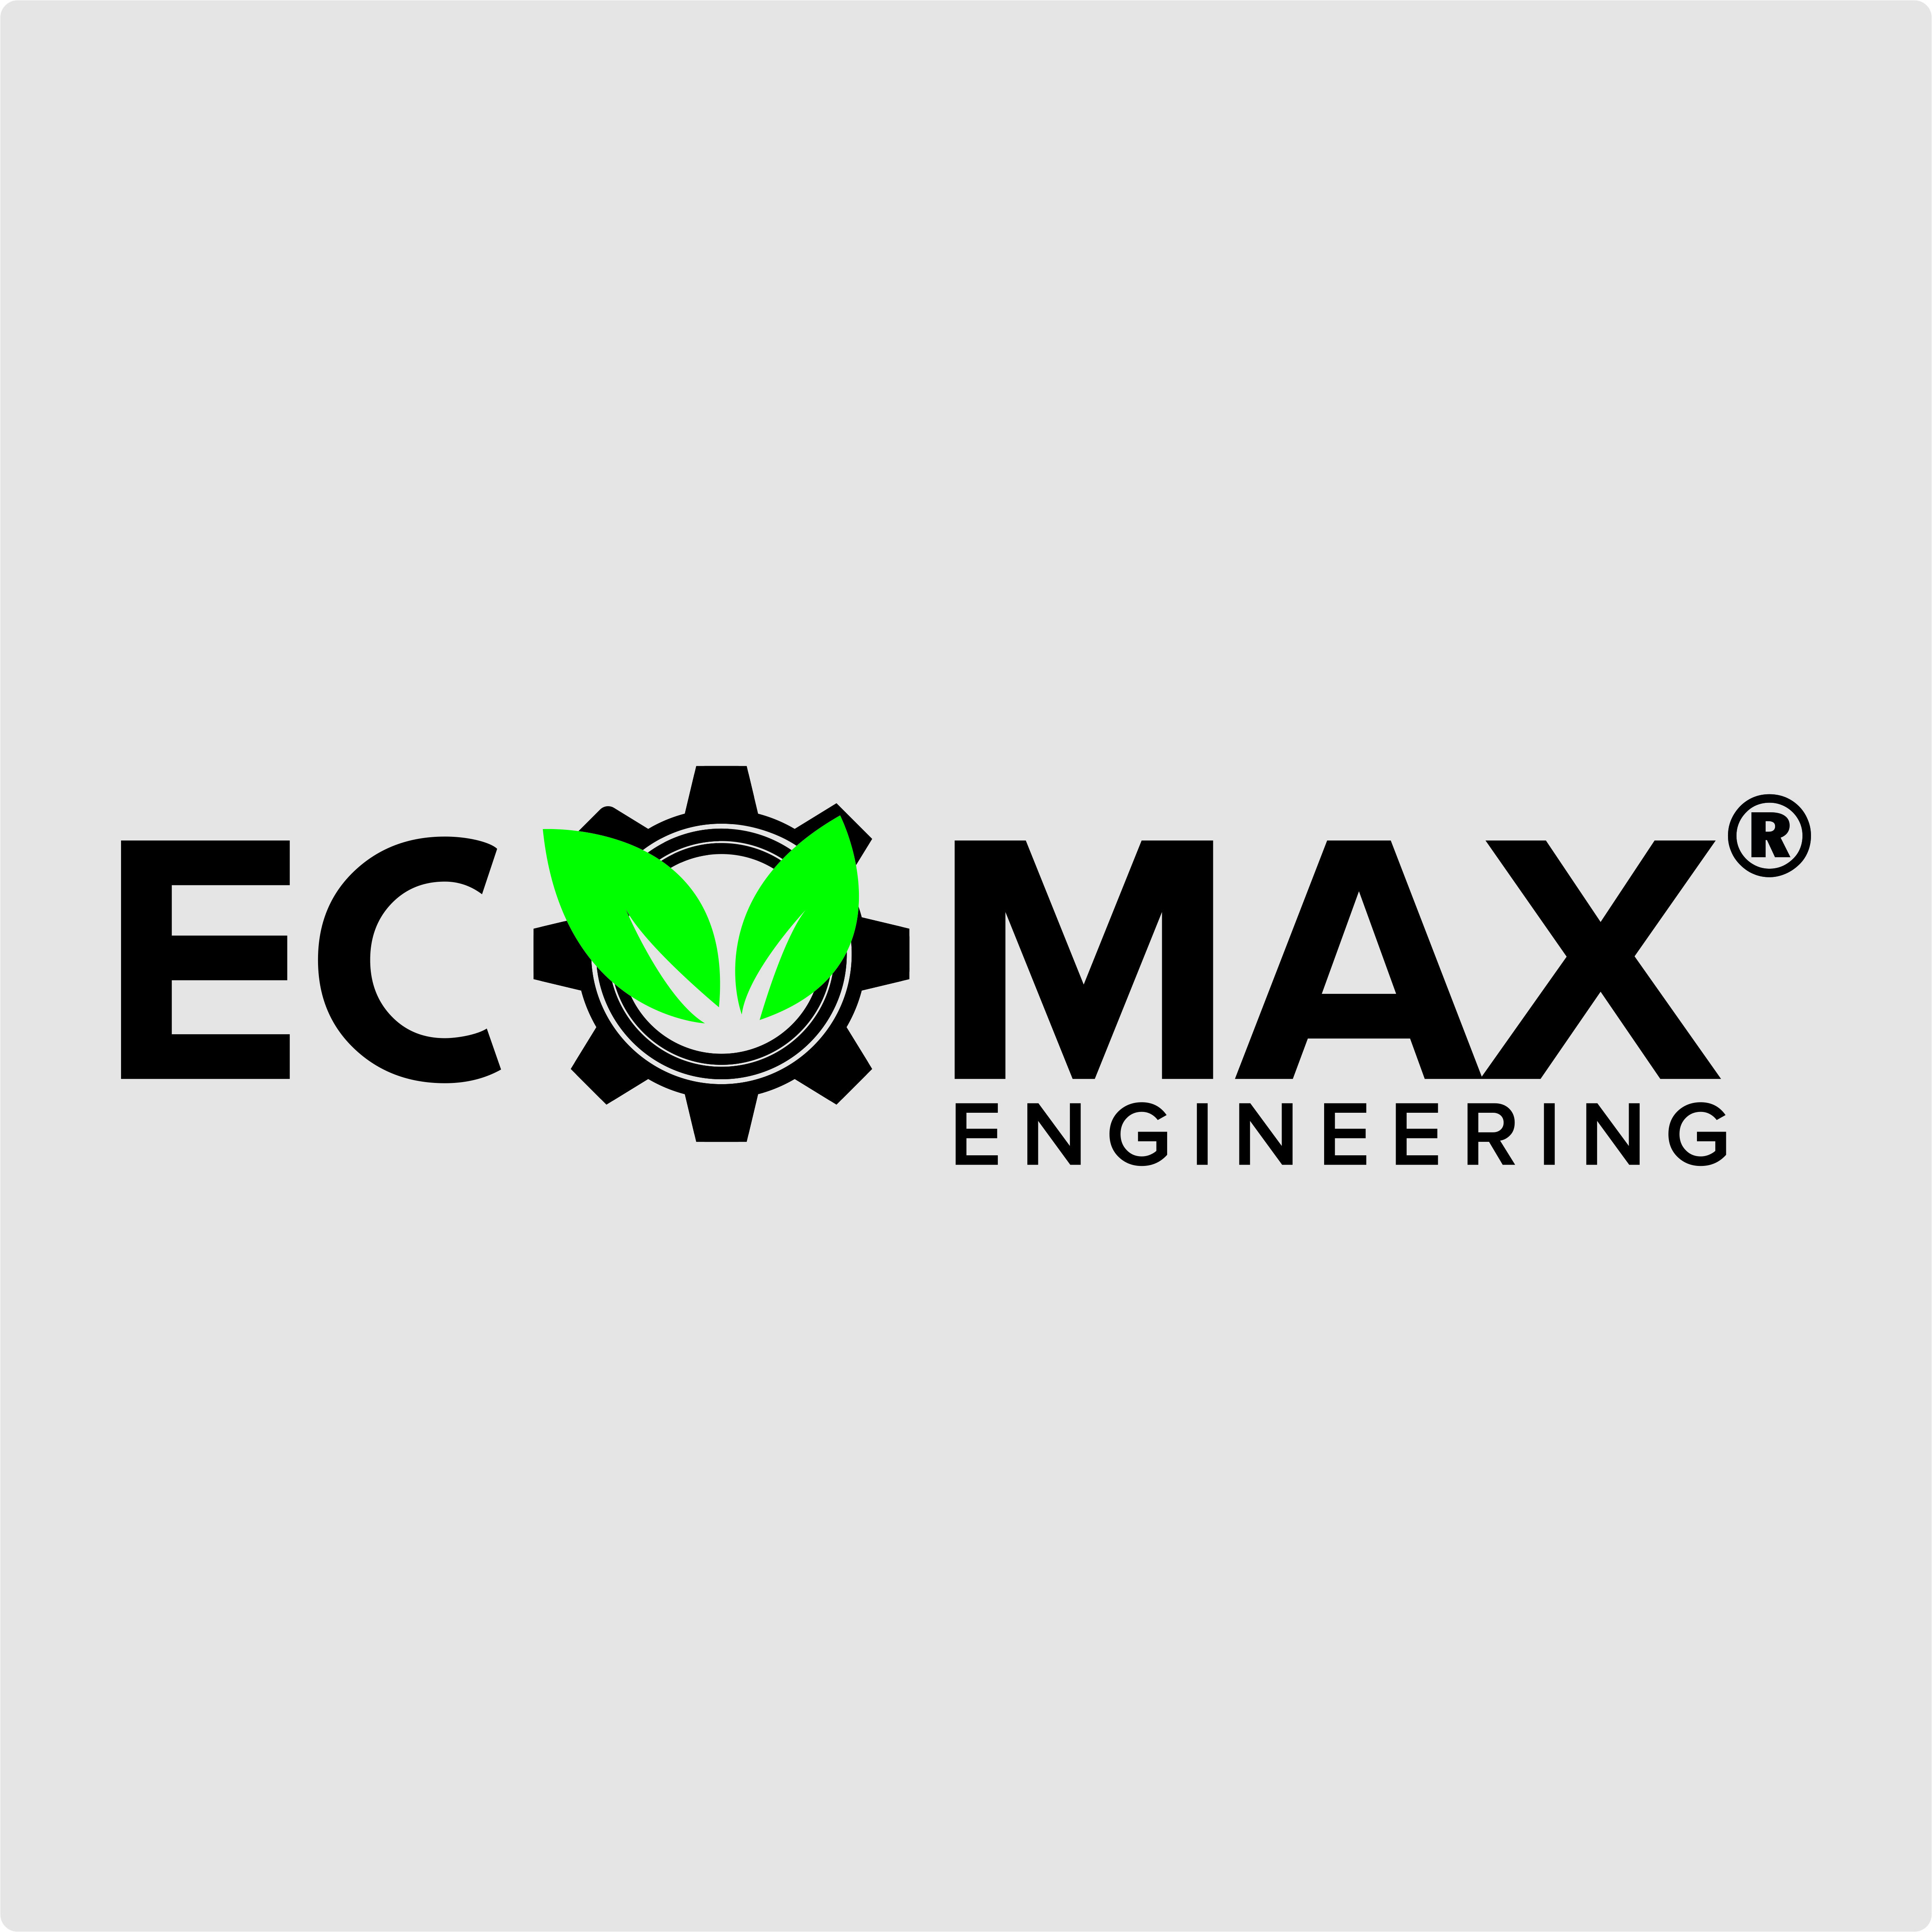 ECOMAX ENGINEERING FACTORY LTD.